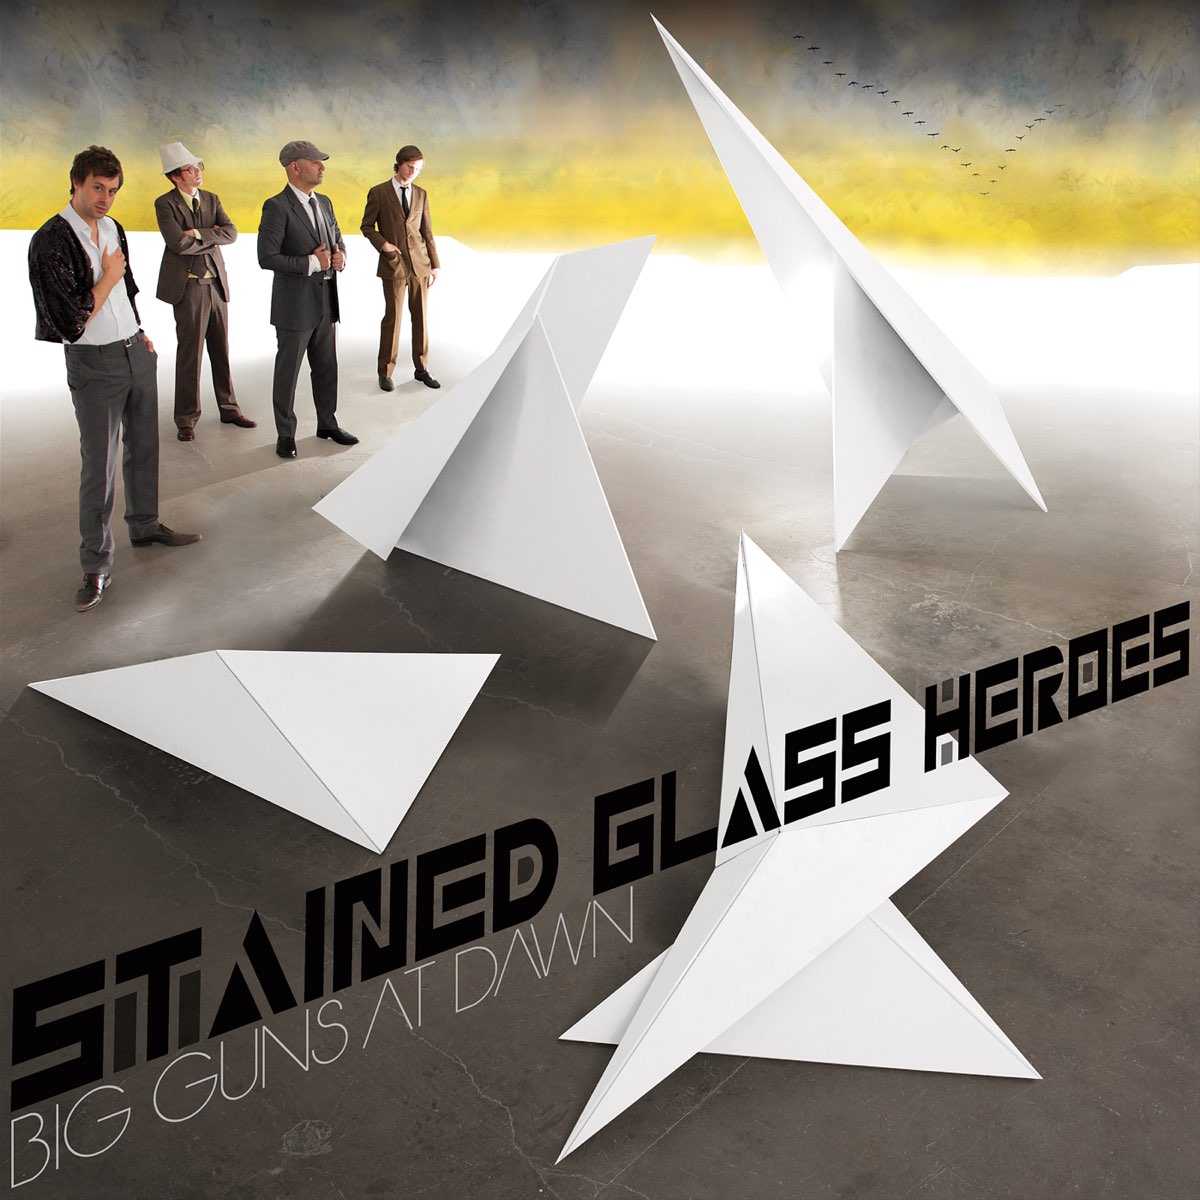 Glass heroes